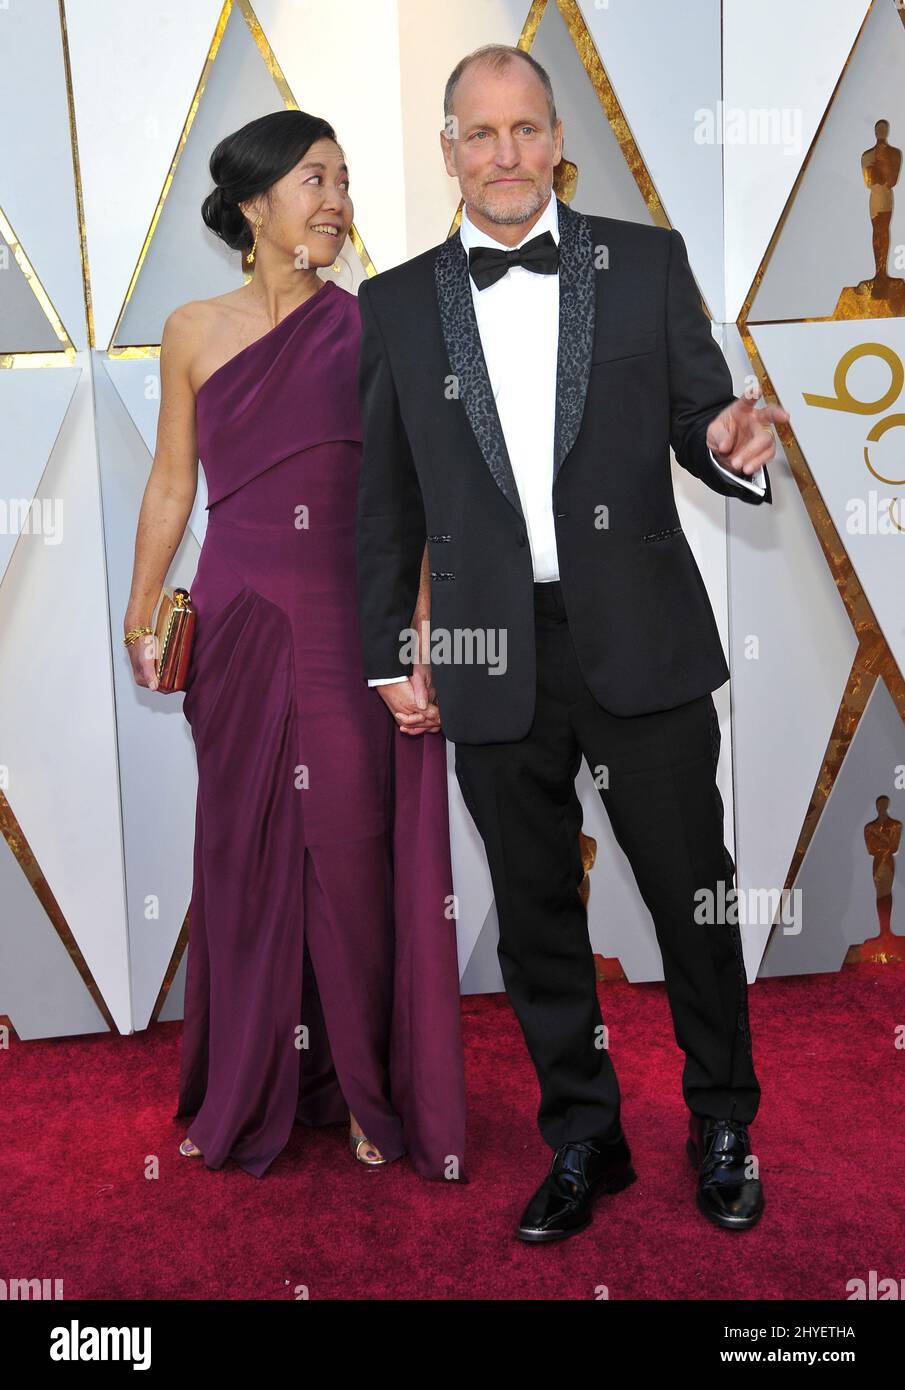 Woody Harrelson assiste aux Academy Awards 90th qui se tiennent au Dolby Theatre Banque D'Images